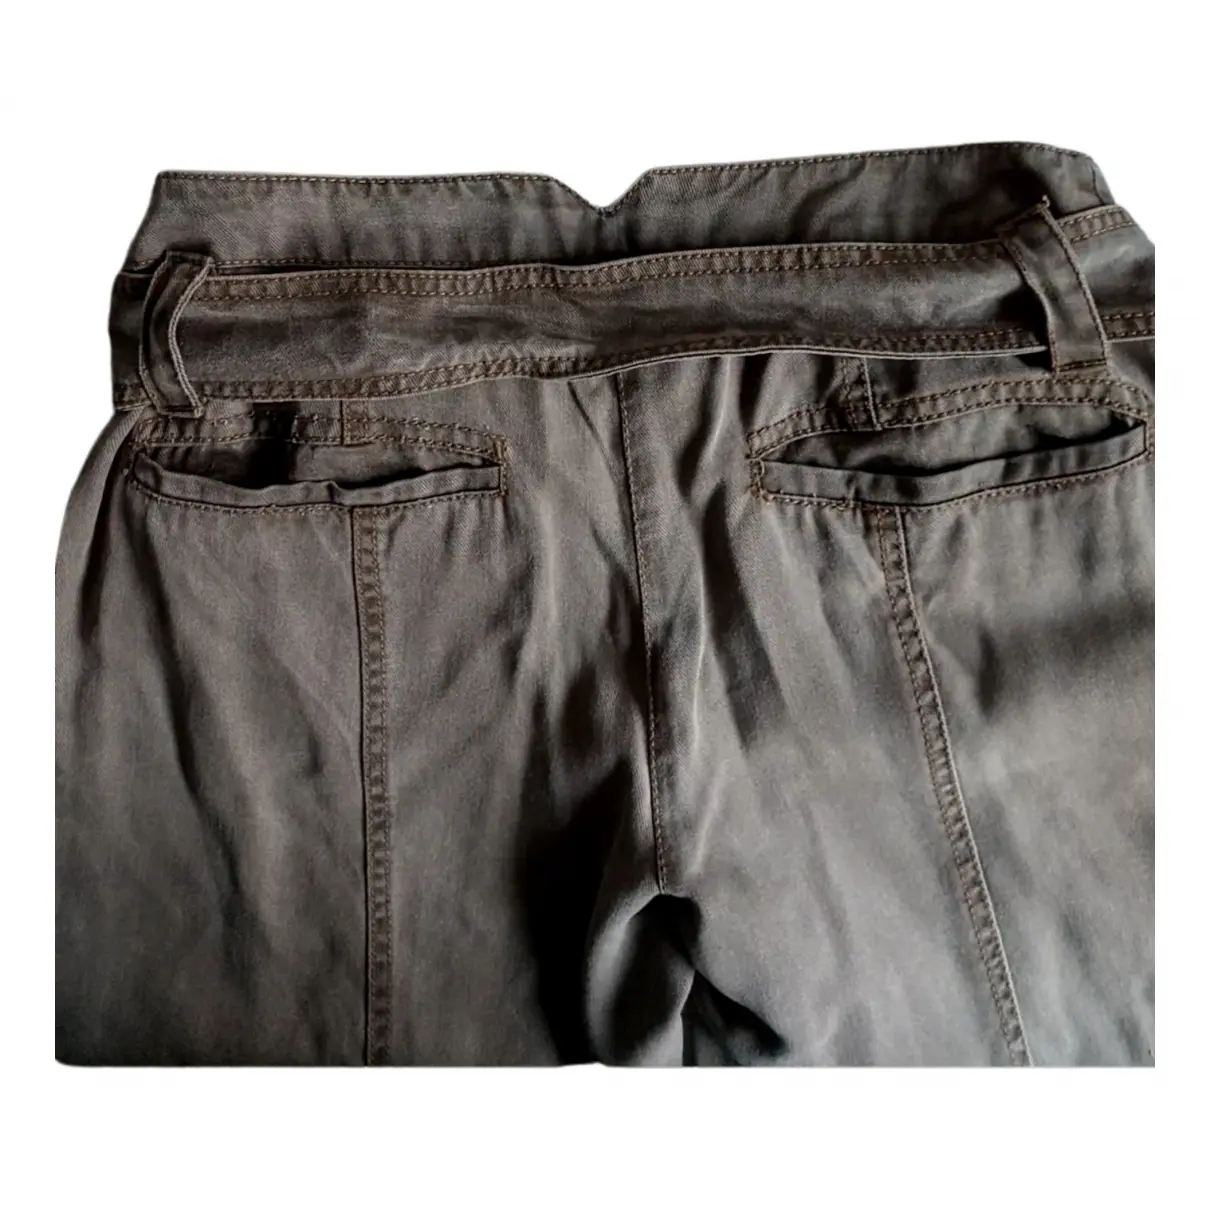 Buy Max & Co Large pants online